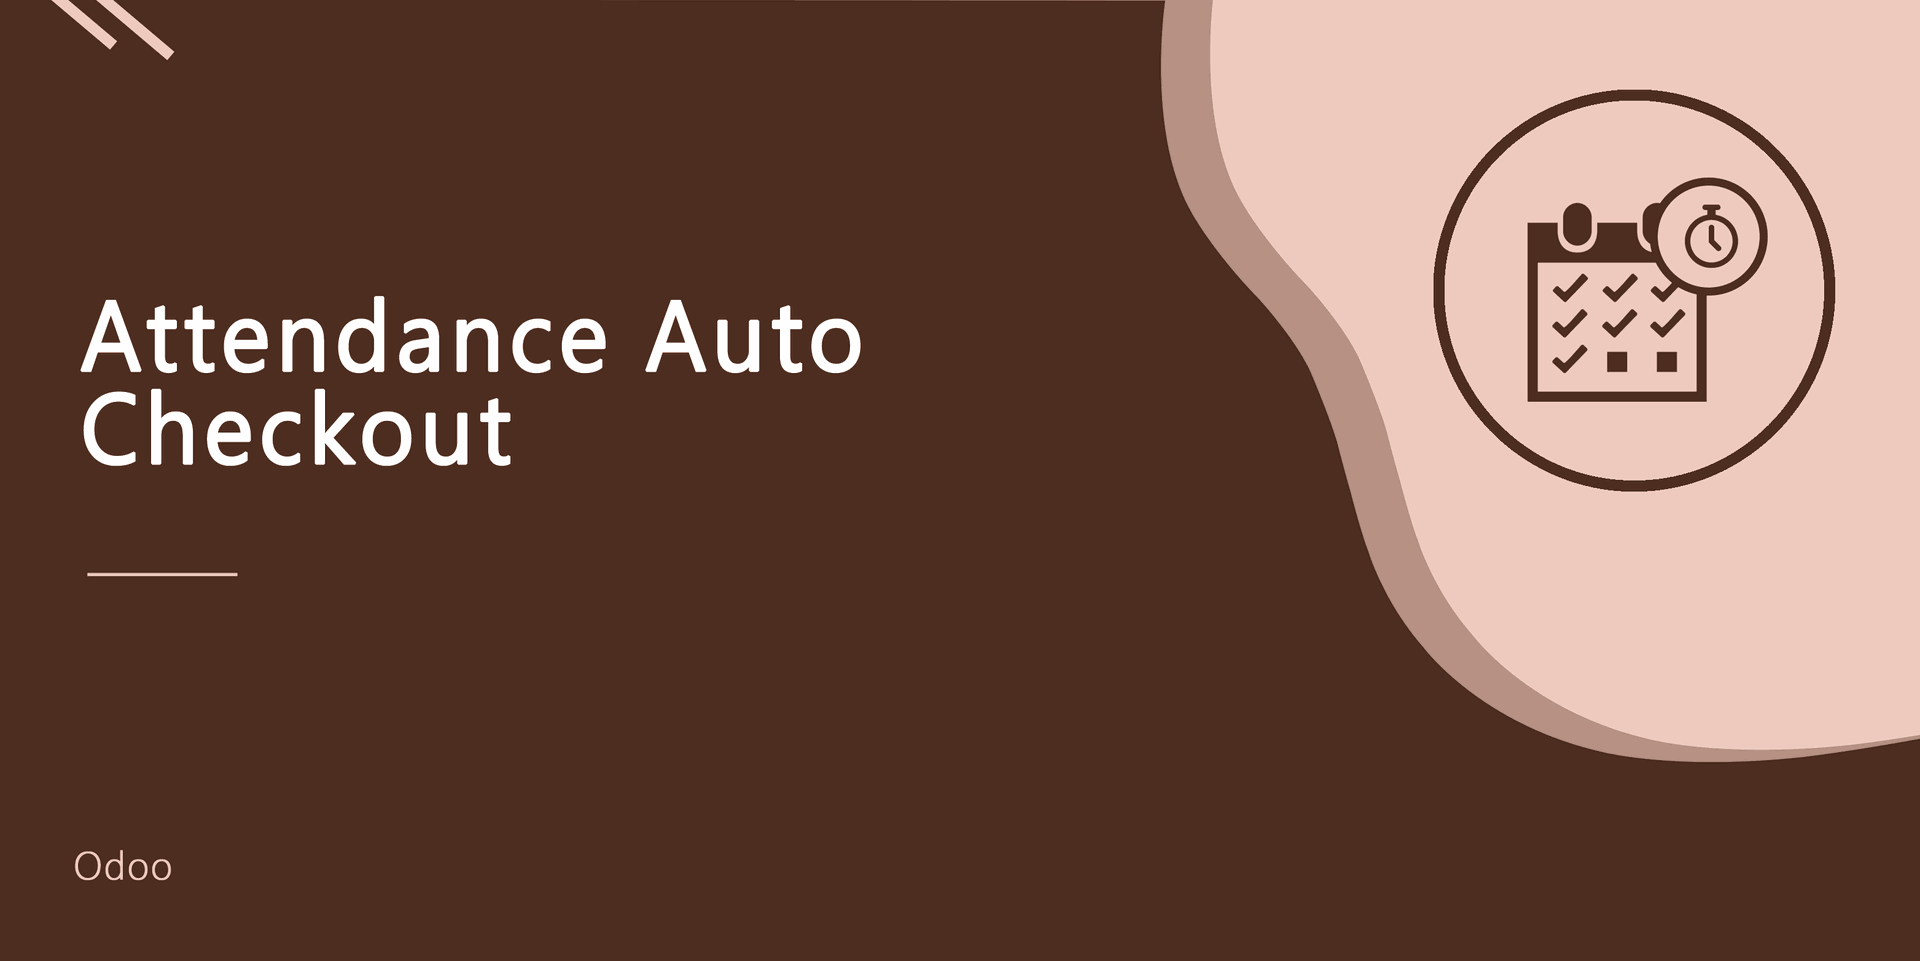 Attendance Auto Checkout
